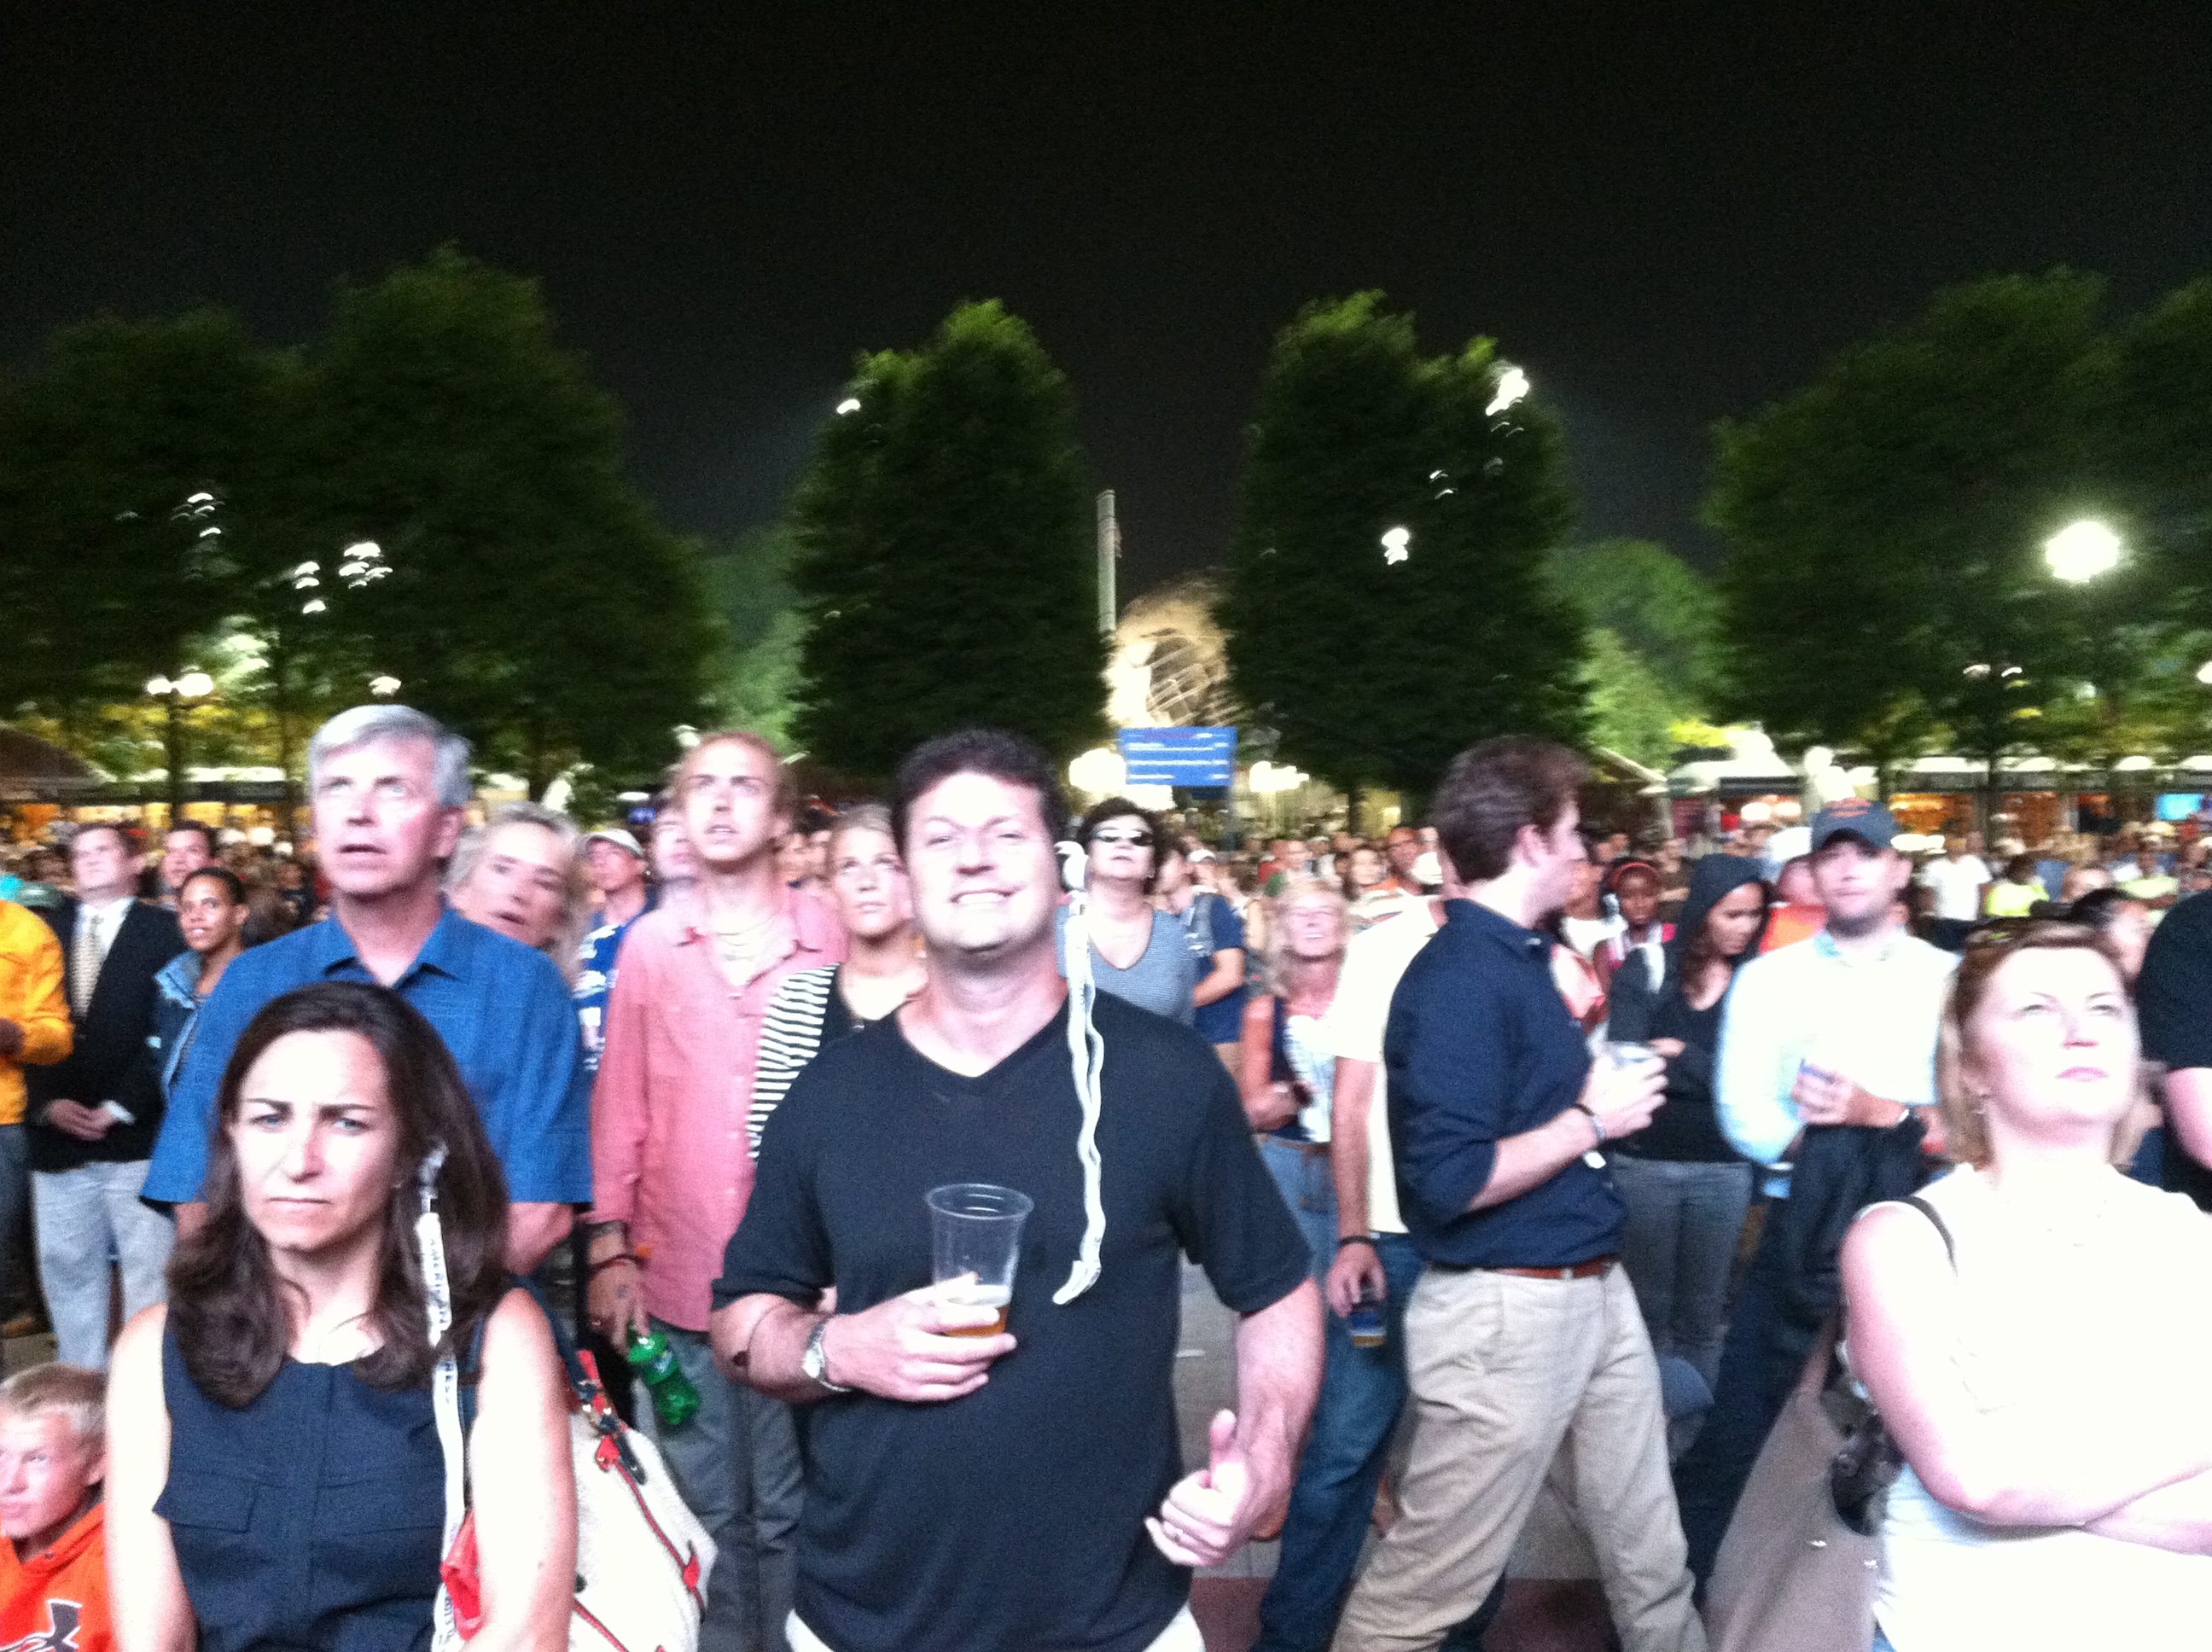 crowds